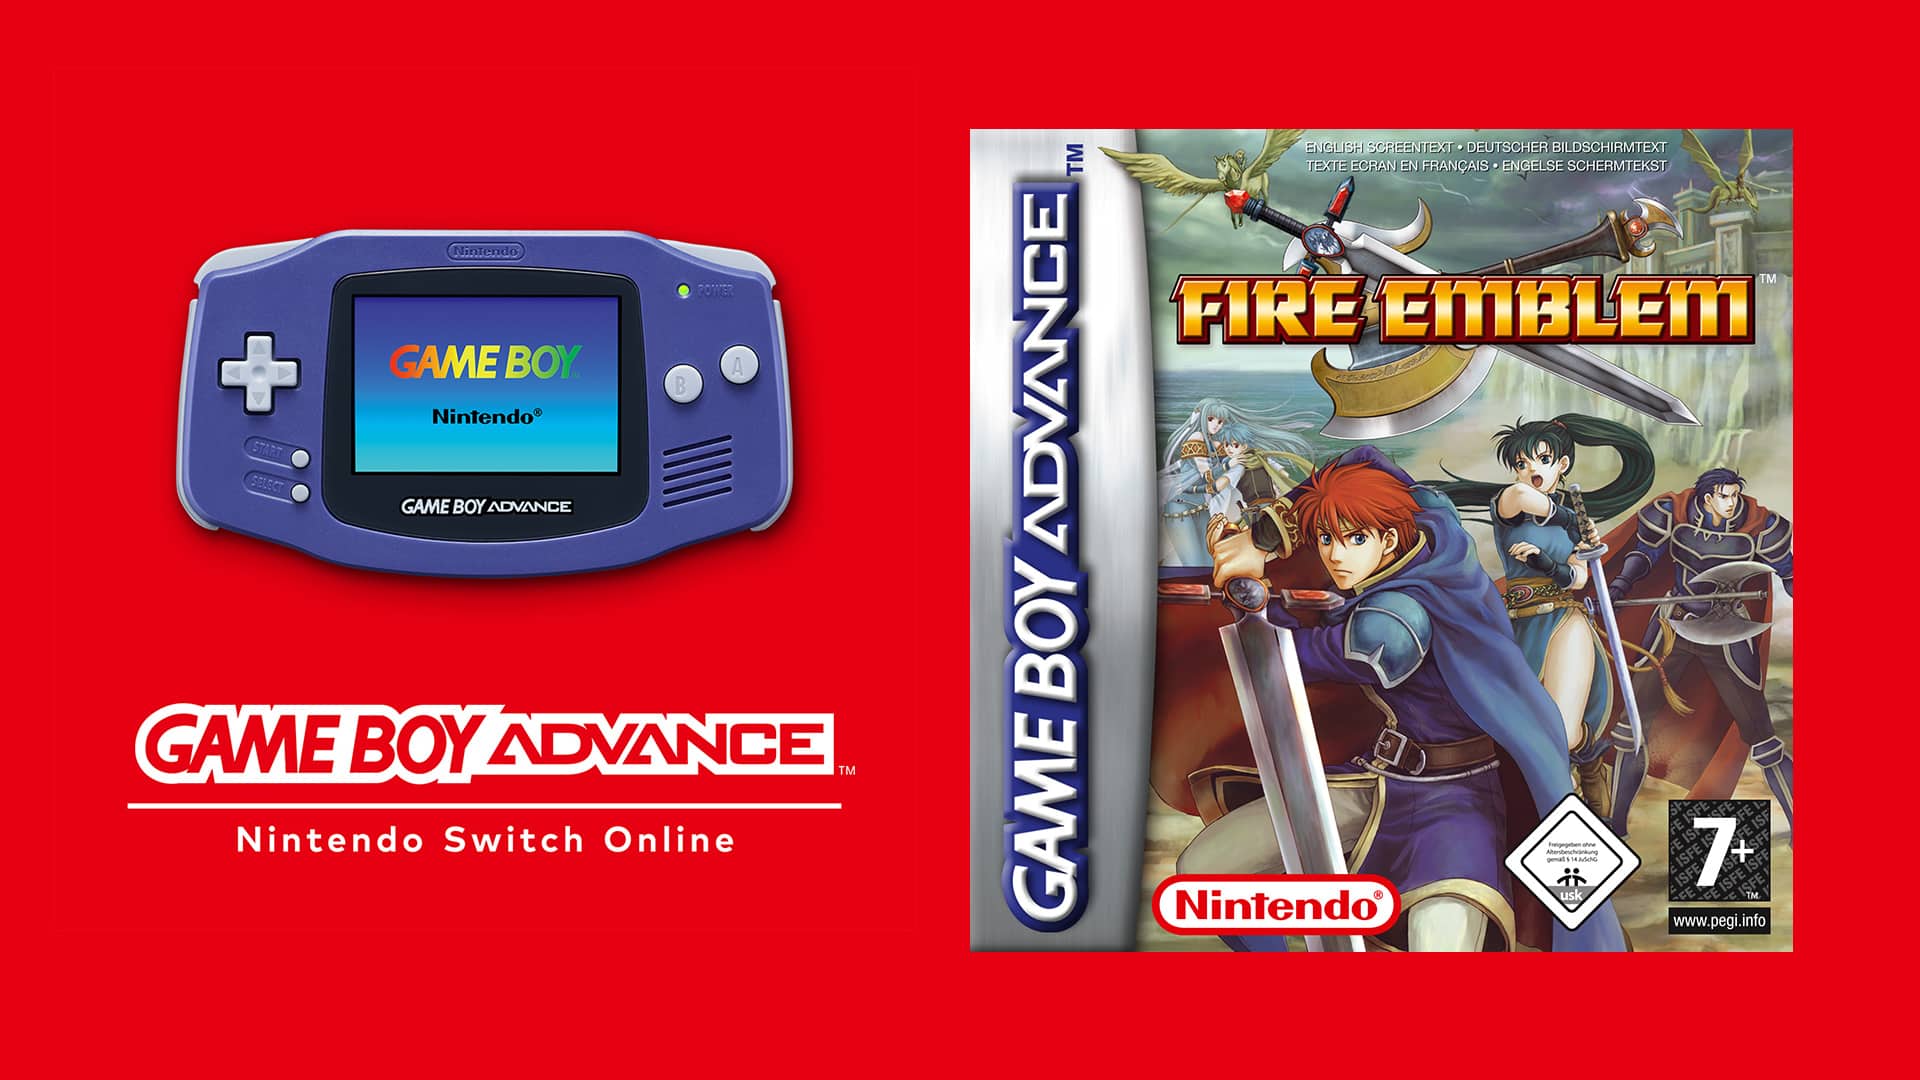 Fire Emblem arriva su Nintendo Switch Online 2